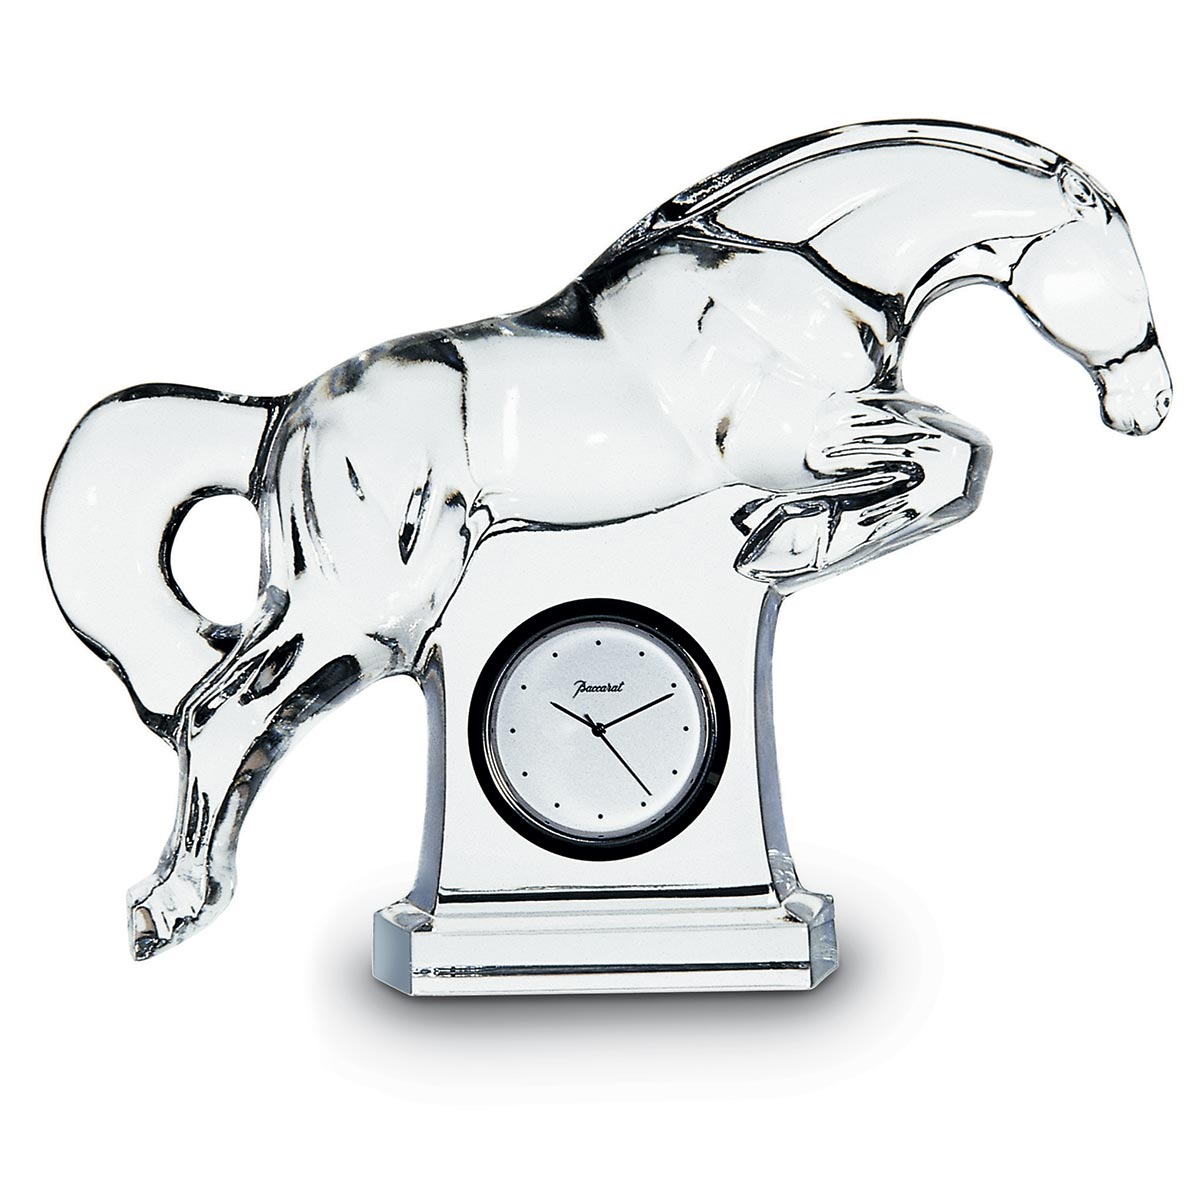 Horse jumping desk clock